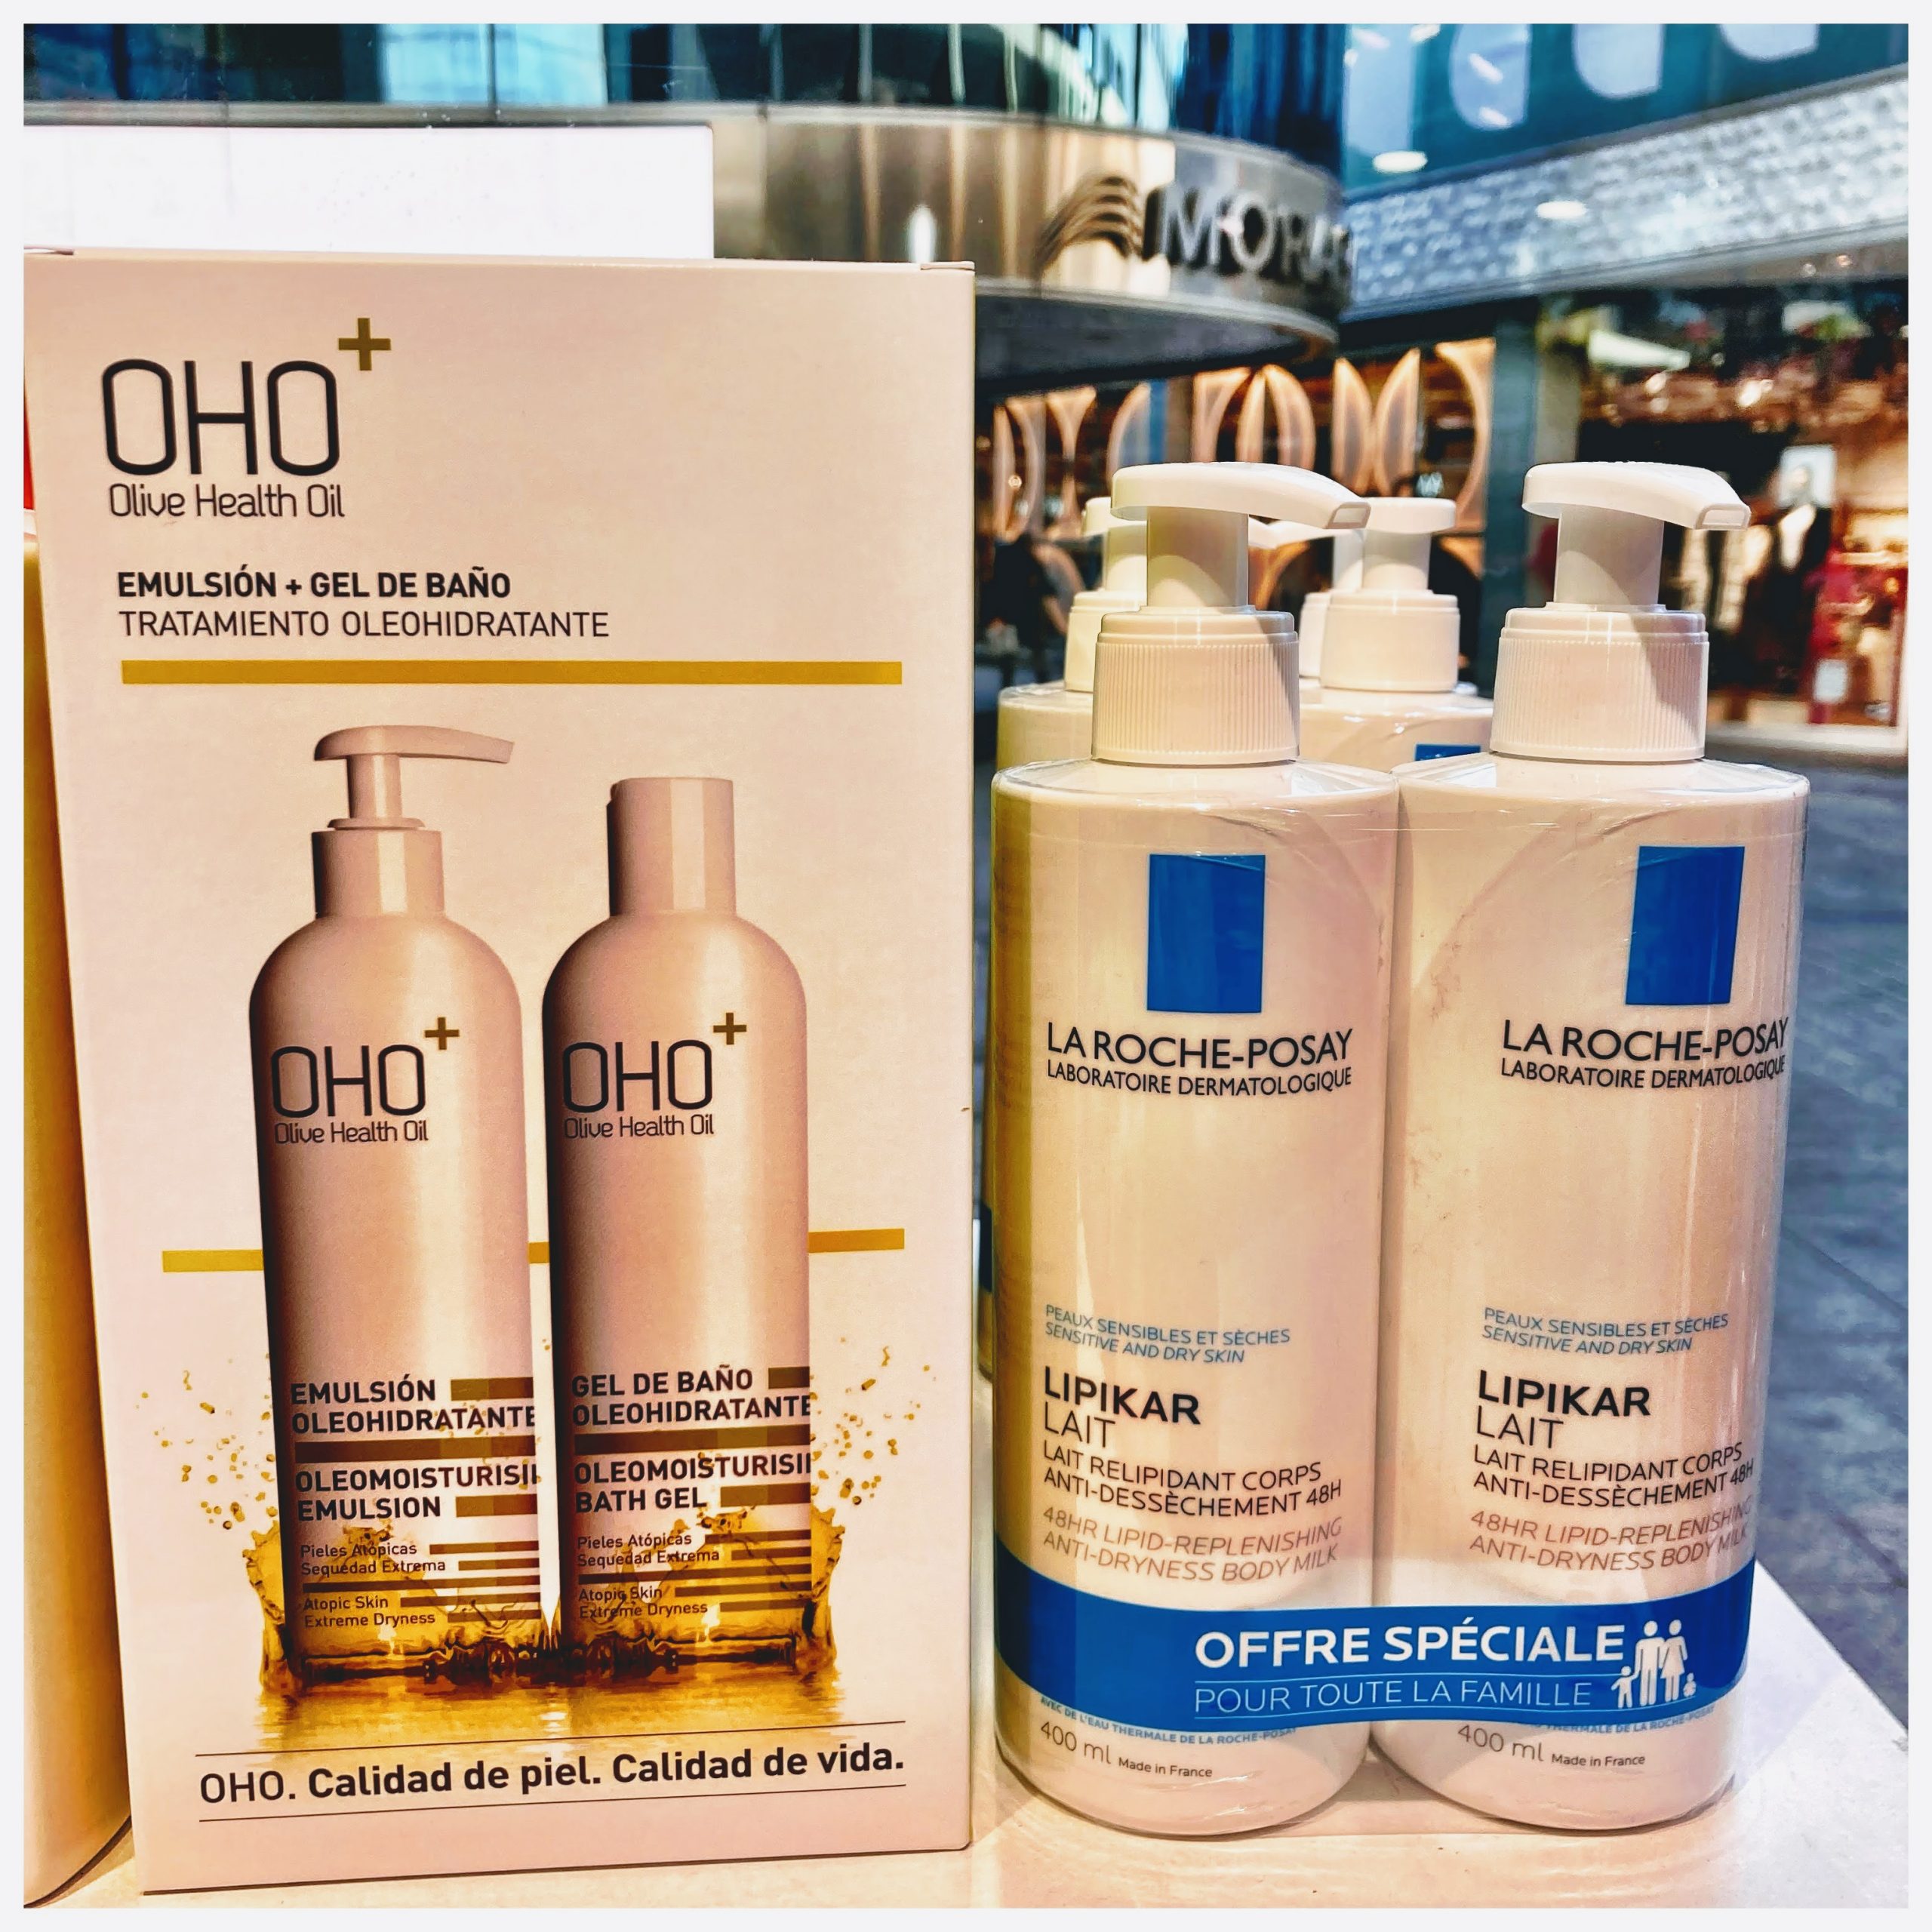 Comprar OHO Pack Emulsión Oleohidratante 380 ml + Gel de Baño Oleohidratante 400 ml